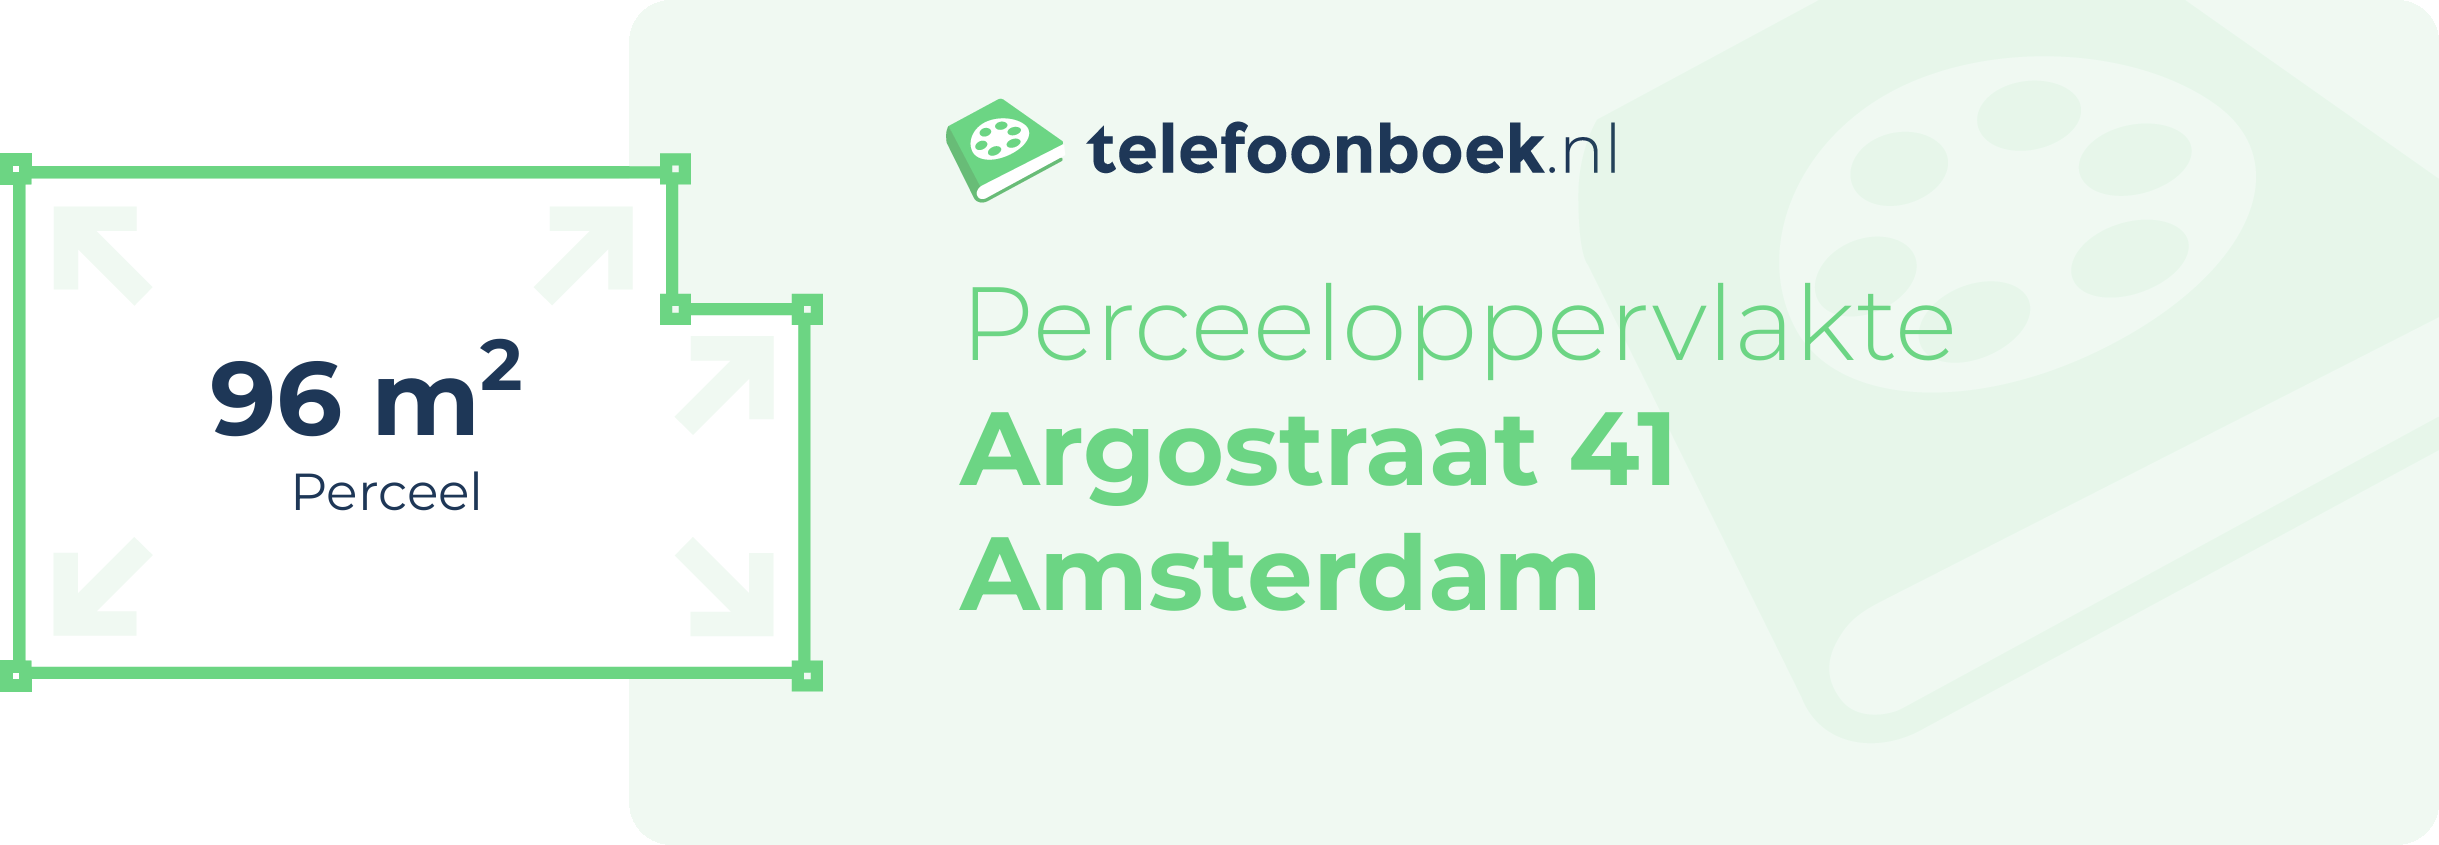 Perceeloppervlakte Argostraat 41 Amsterdam